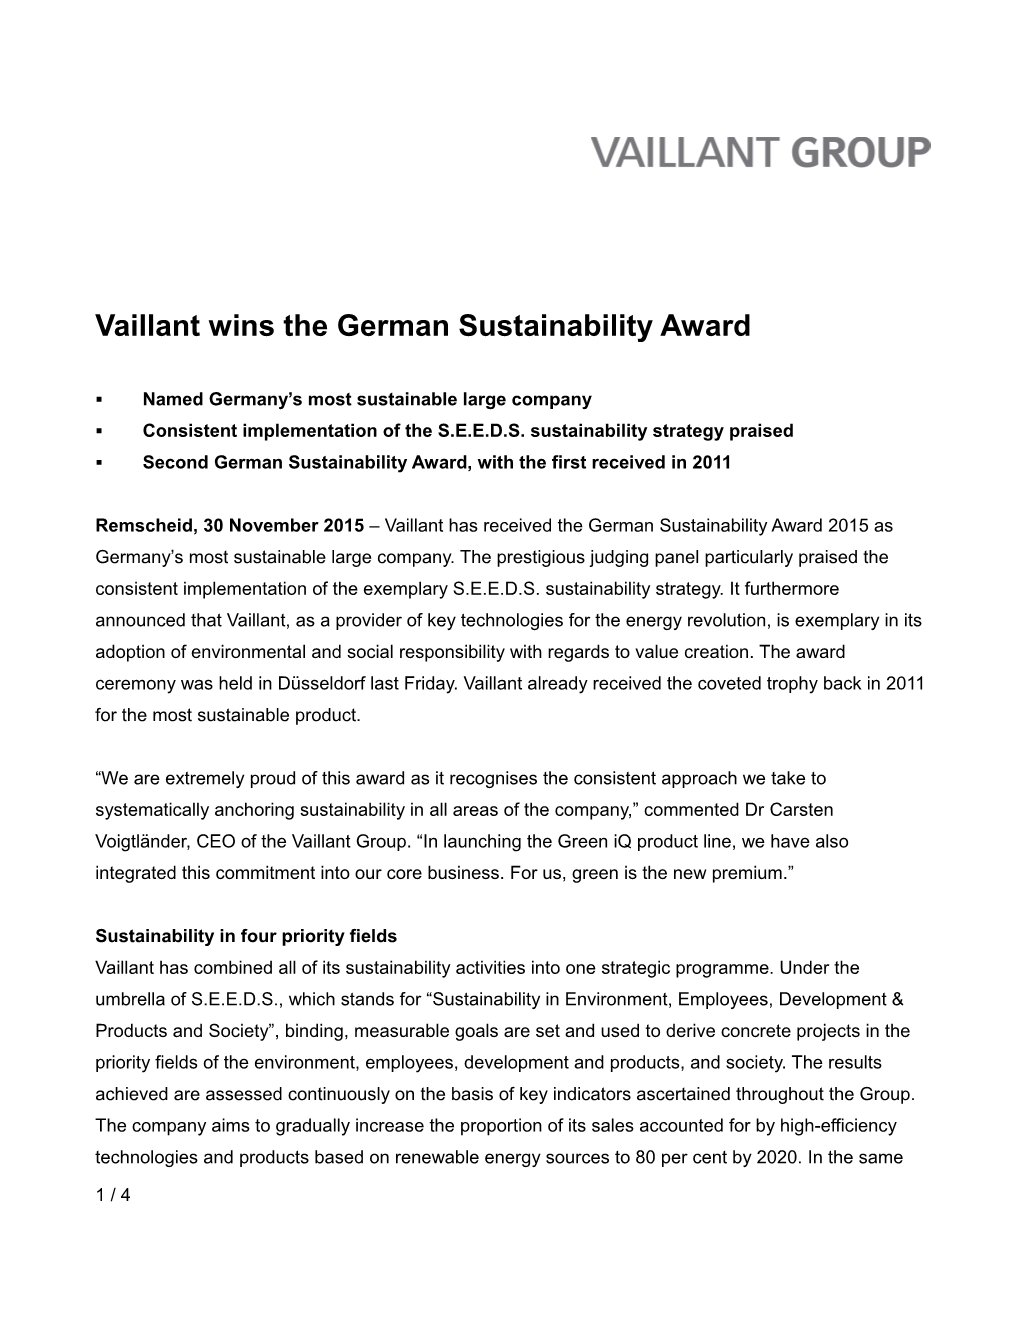 Vaillant Wins the German Sustainability Award